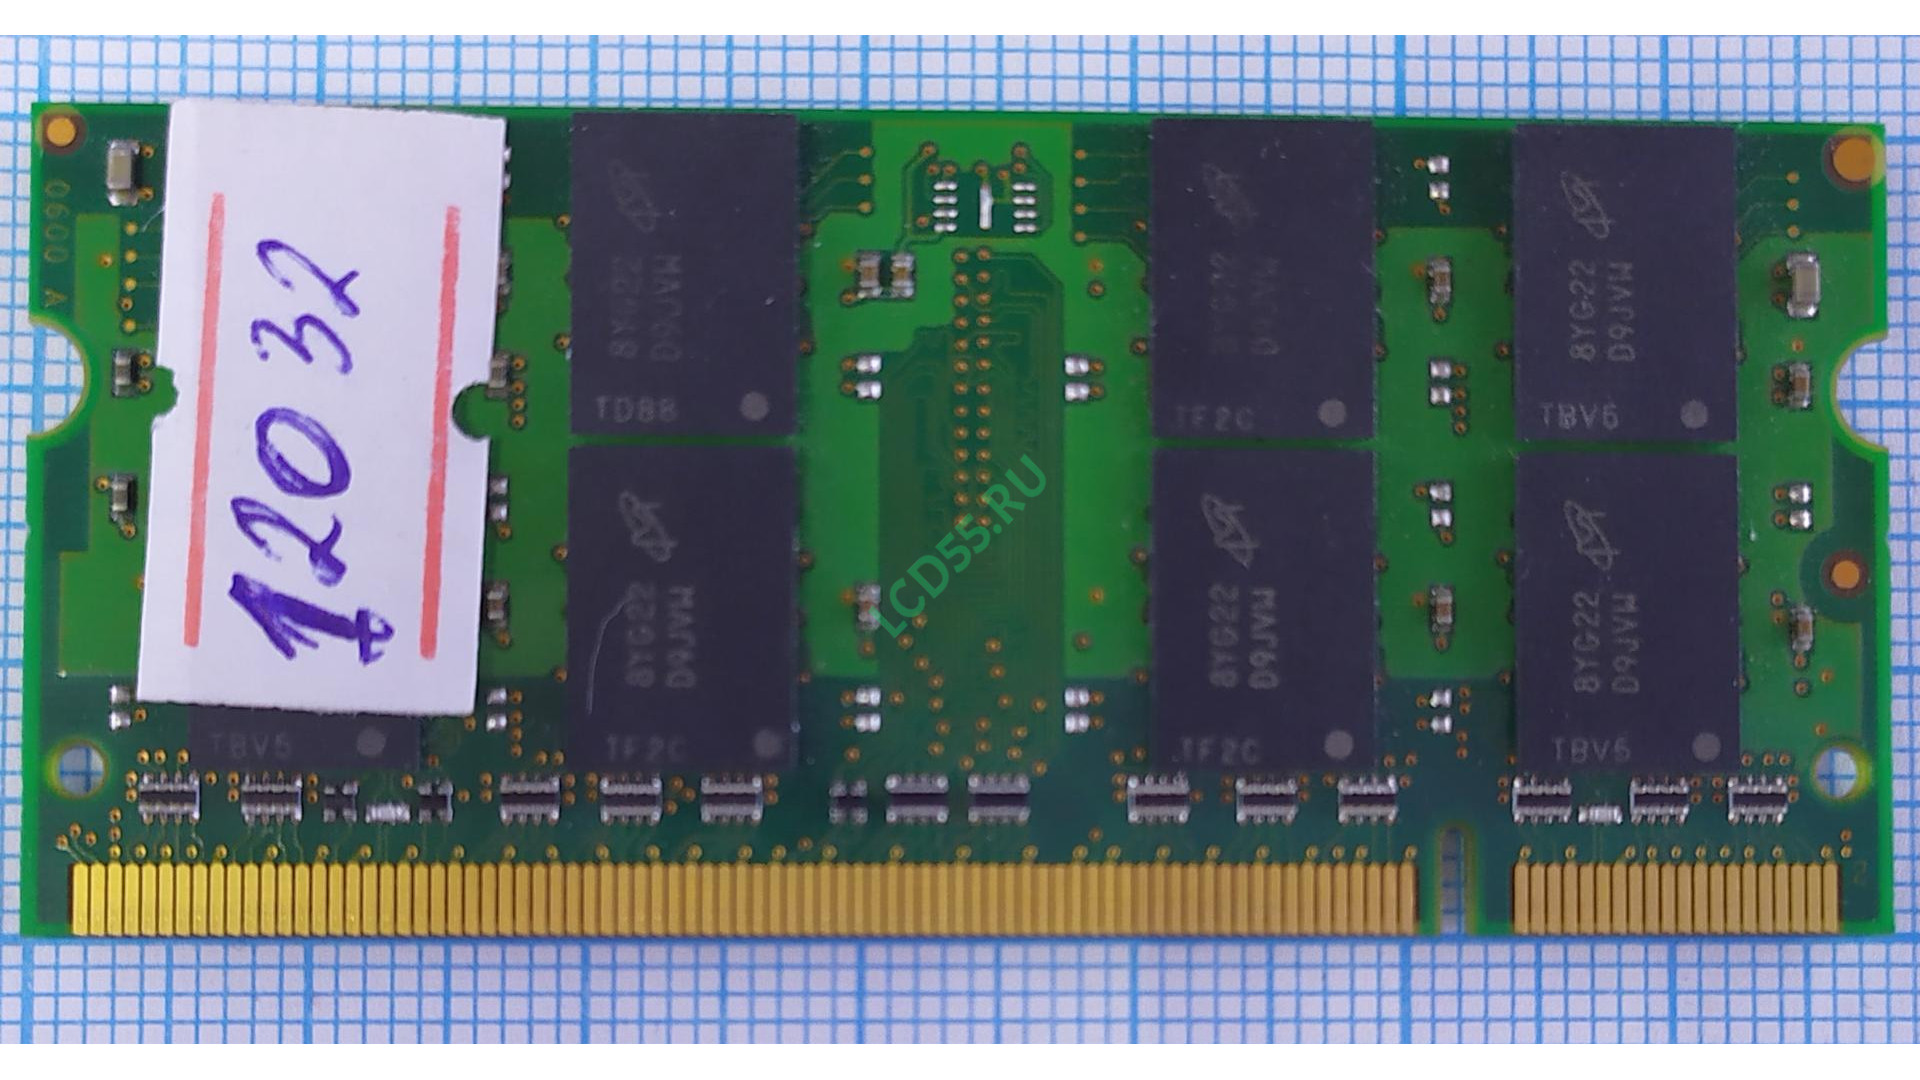 Micron DDR-II 667Mhz SODIMM 1Gb <PC2-5300>